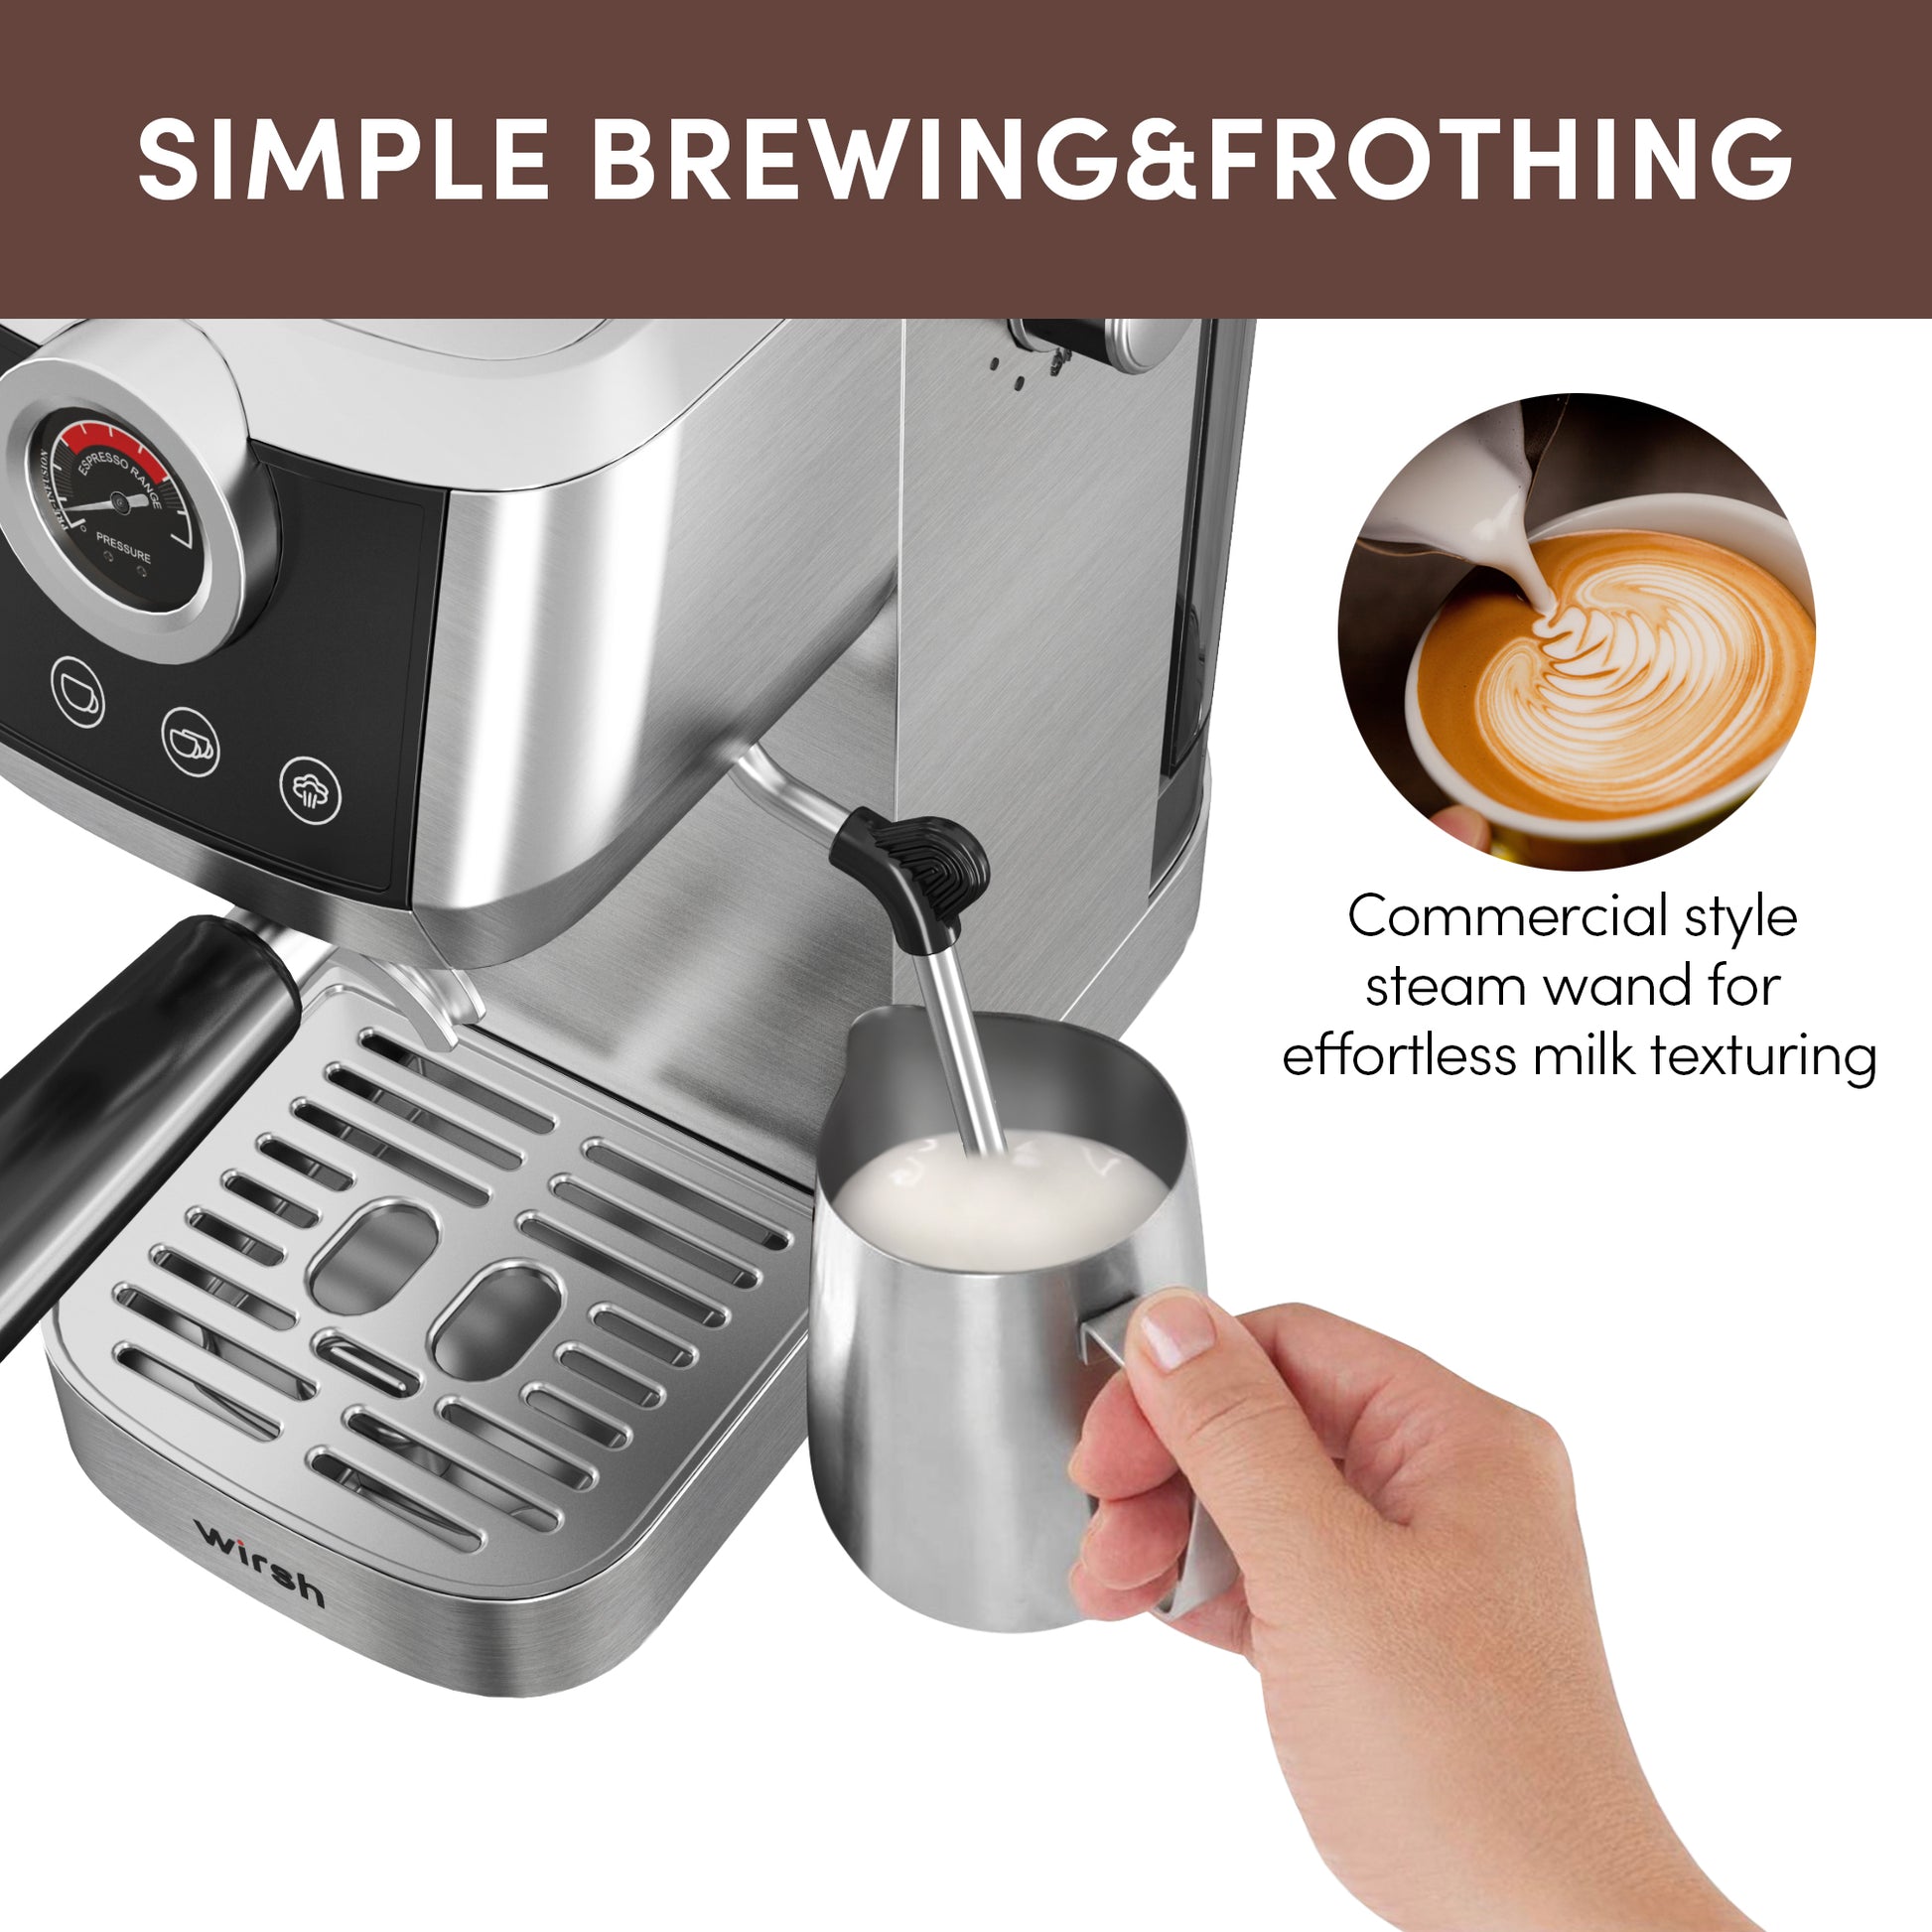 < img src="espresso machine.jpg" alt="wirsh 20bar espresso machine simple brewing frothing"/>